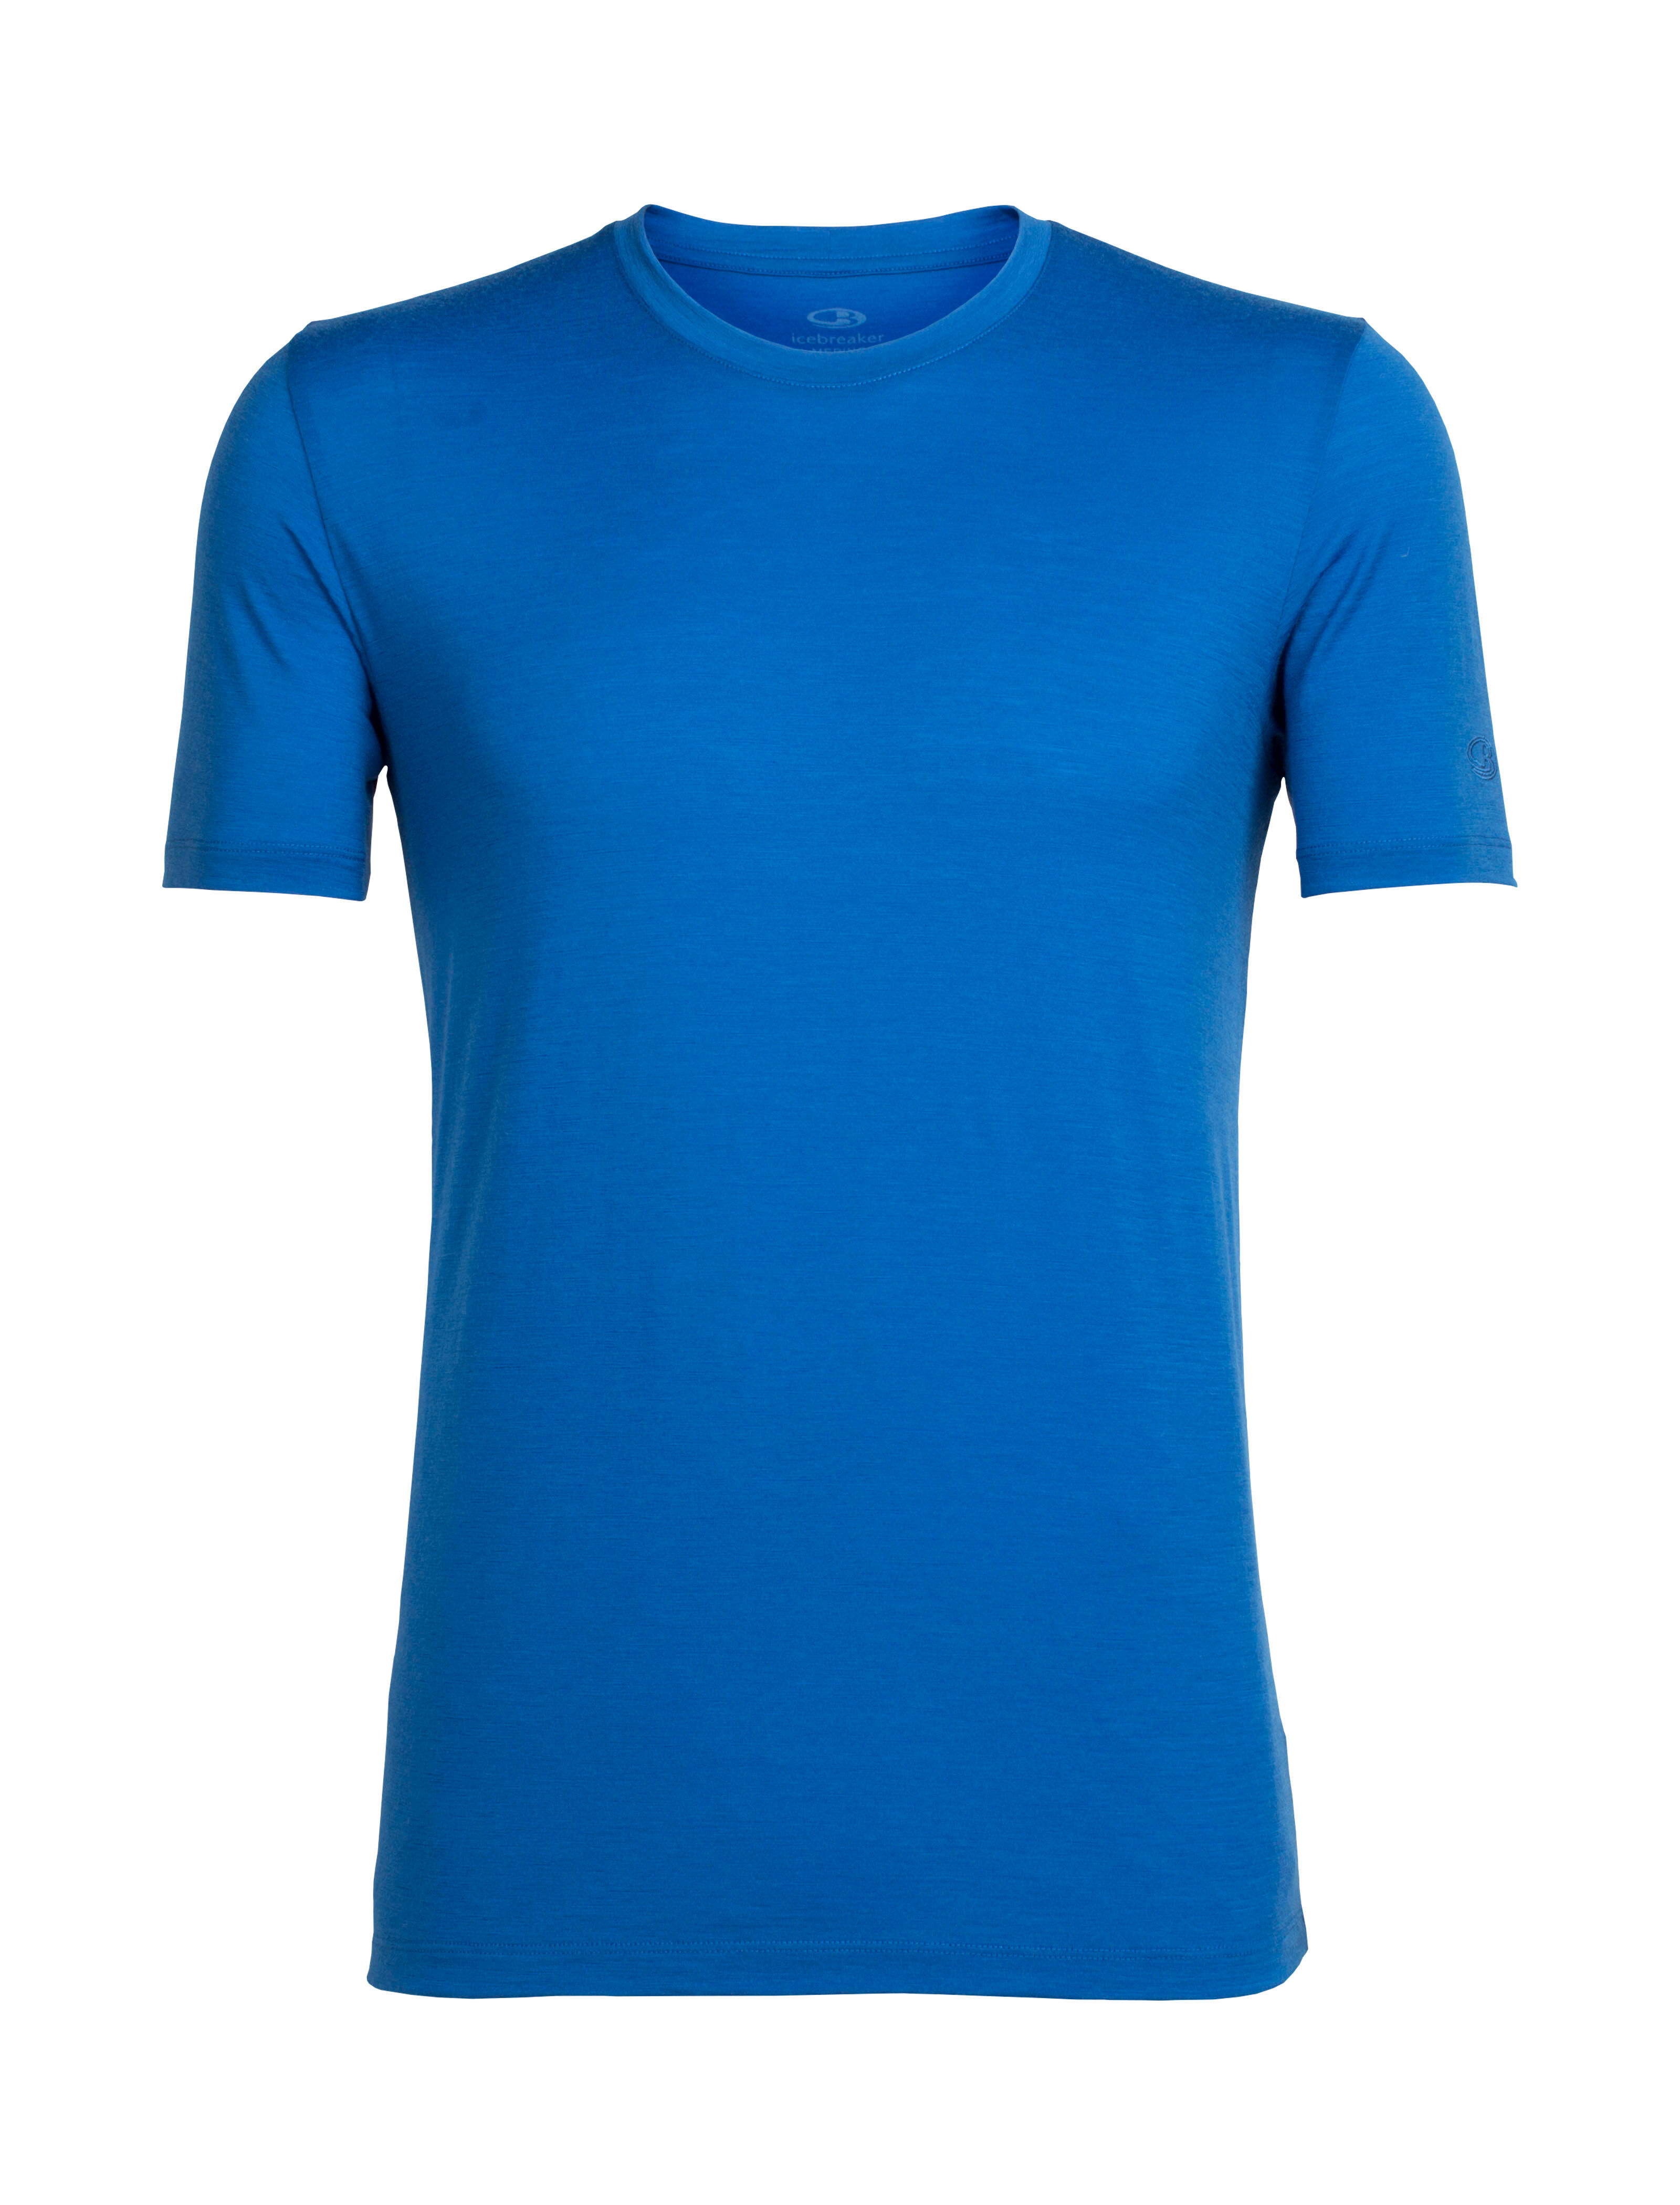 Icebreaker - Tech Lite Short Sleeve Crewe - T-Shirt - Men's